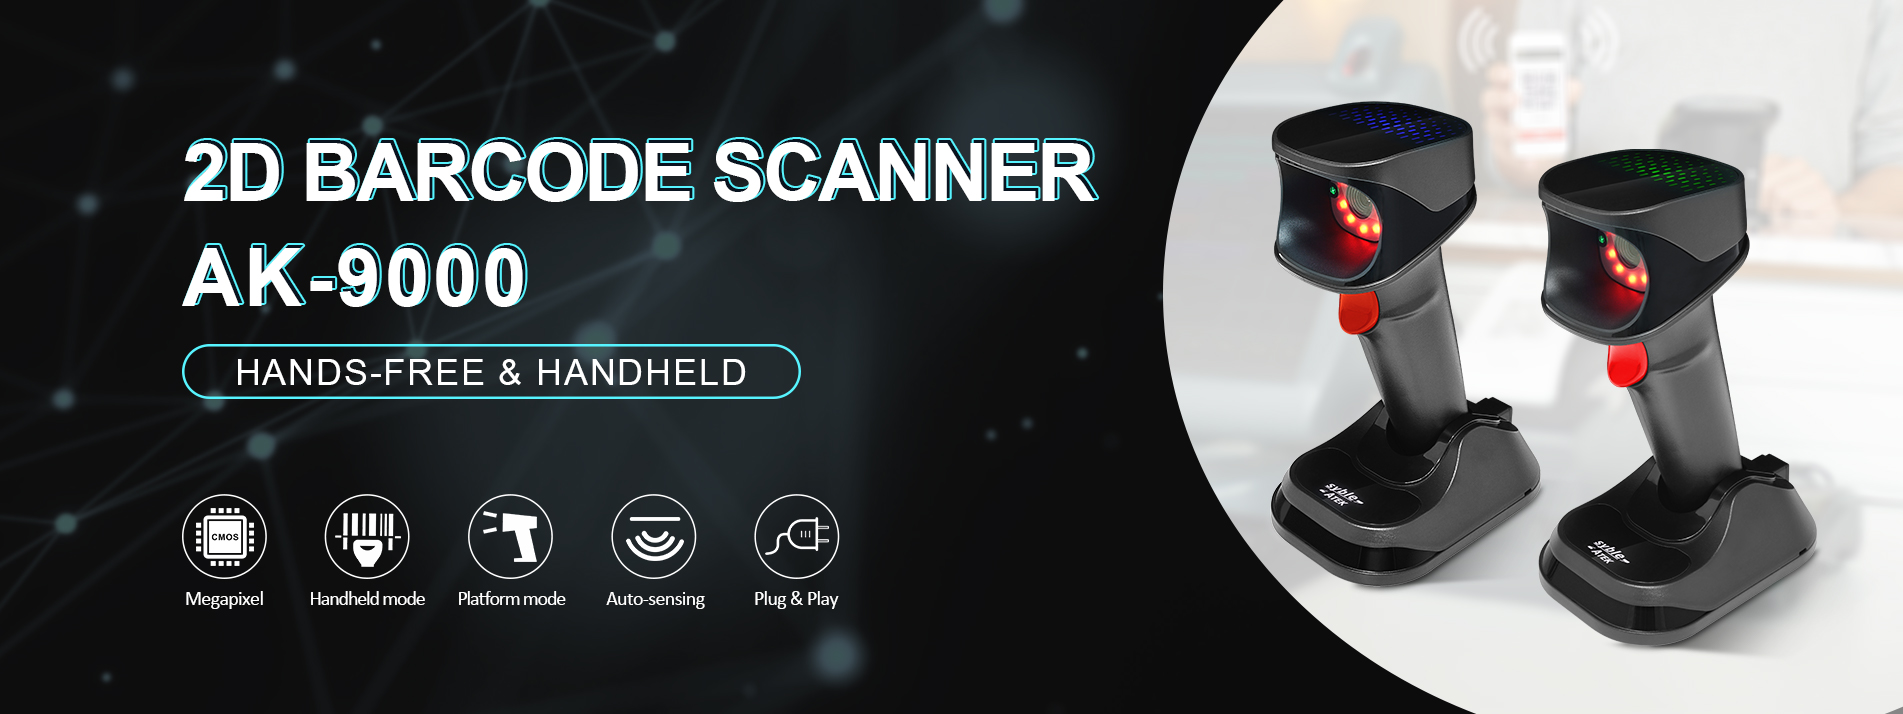 2D Desktop Barcode Scanner Hands-free and Handheld Mode